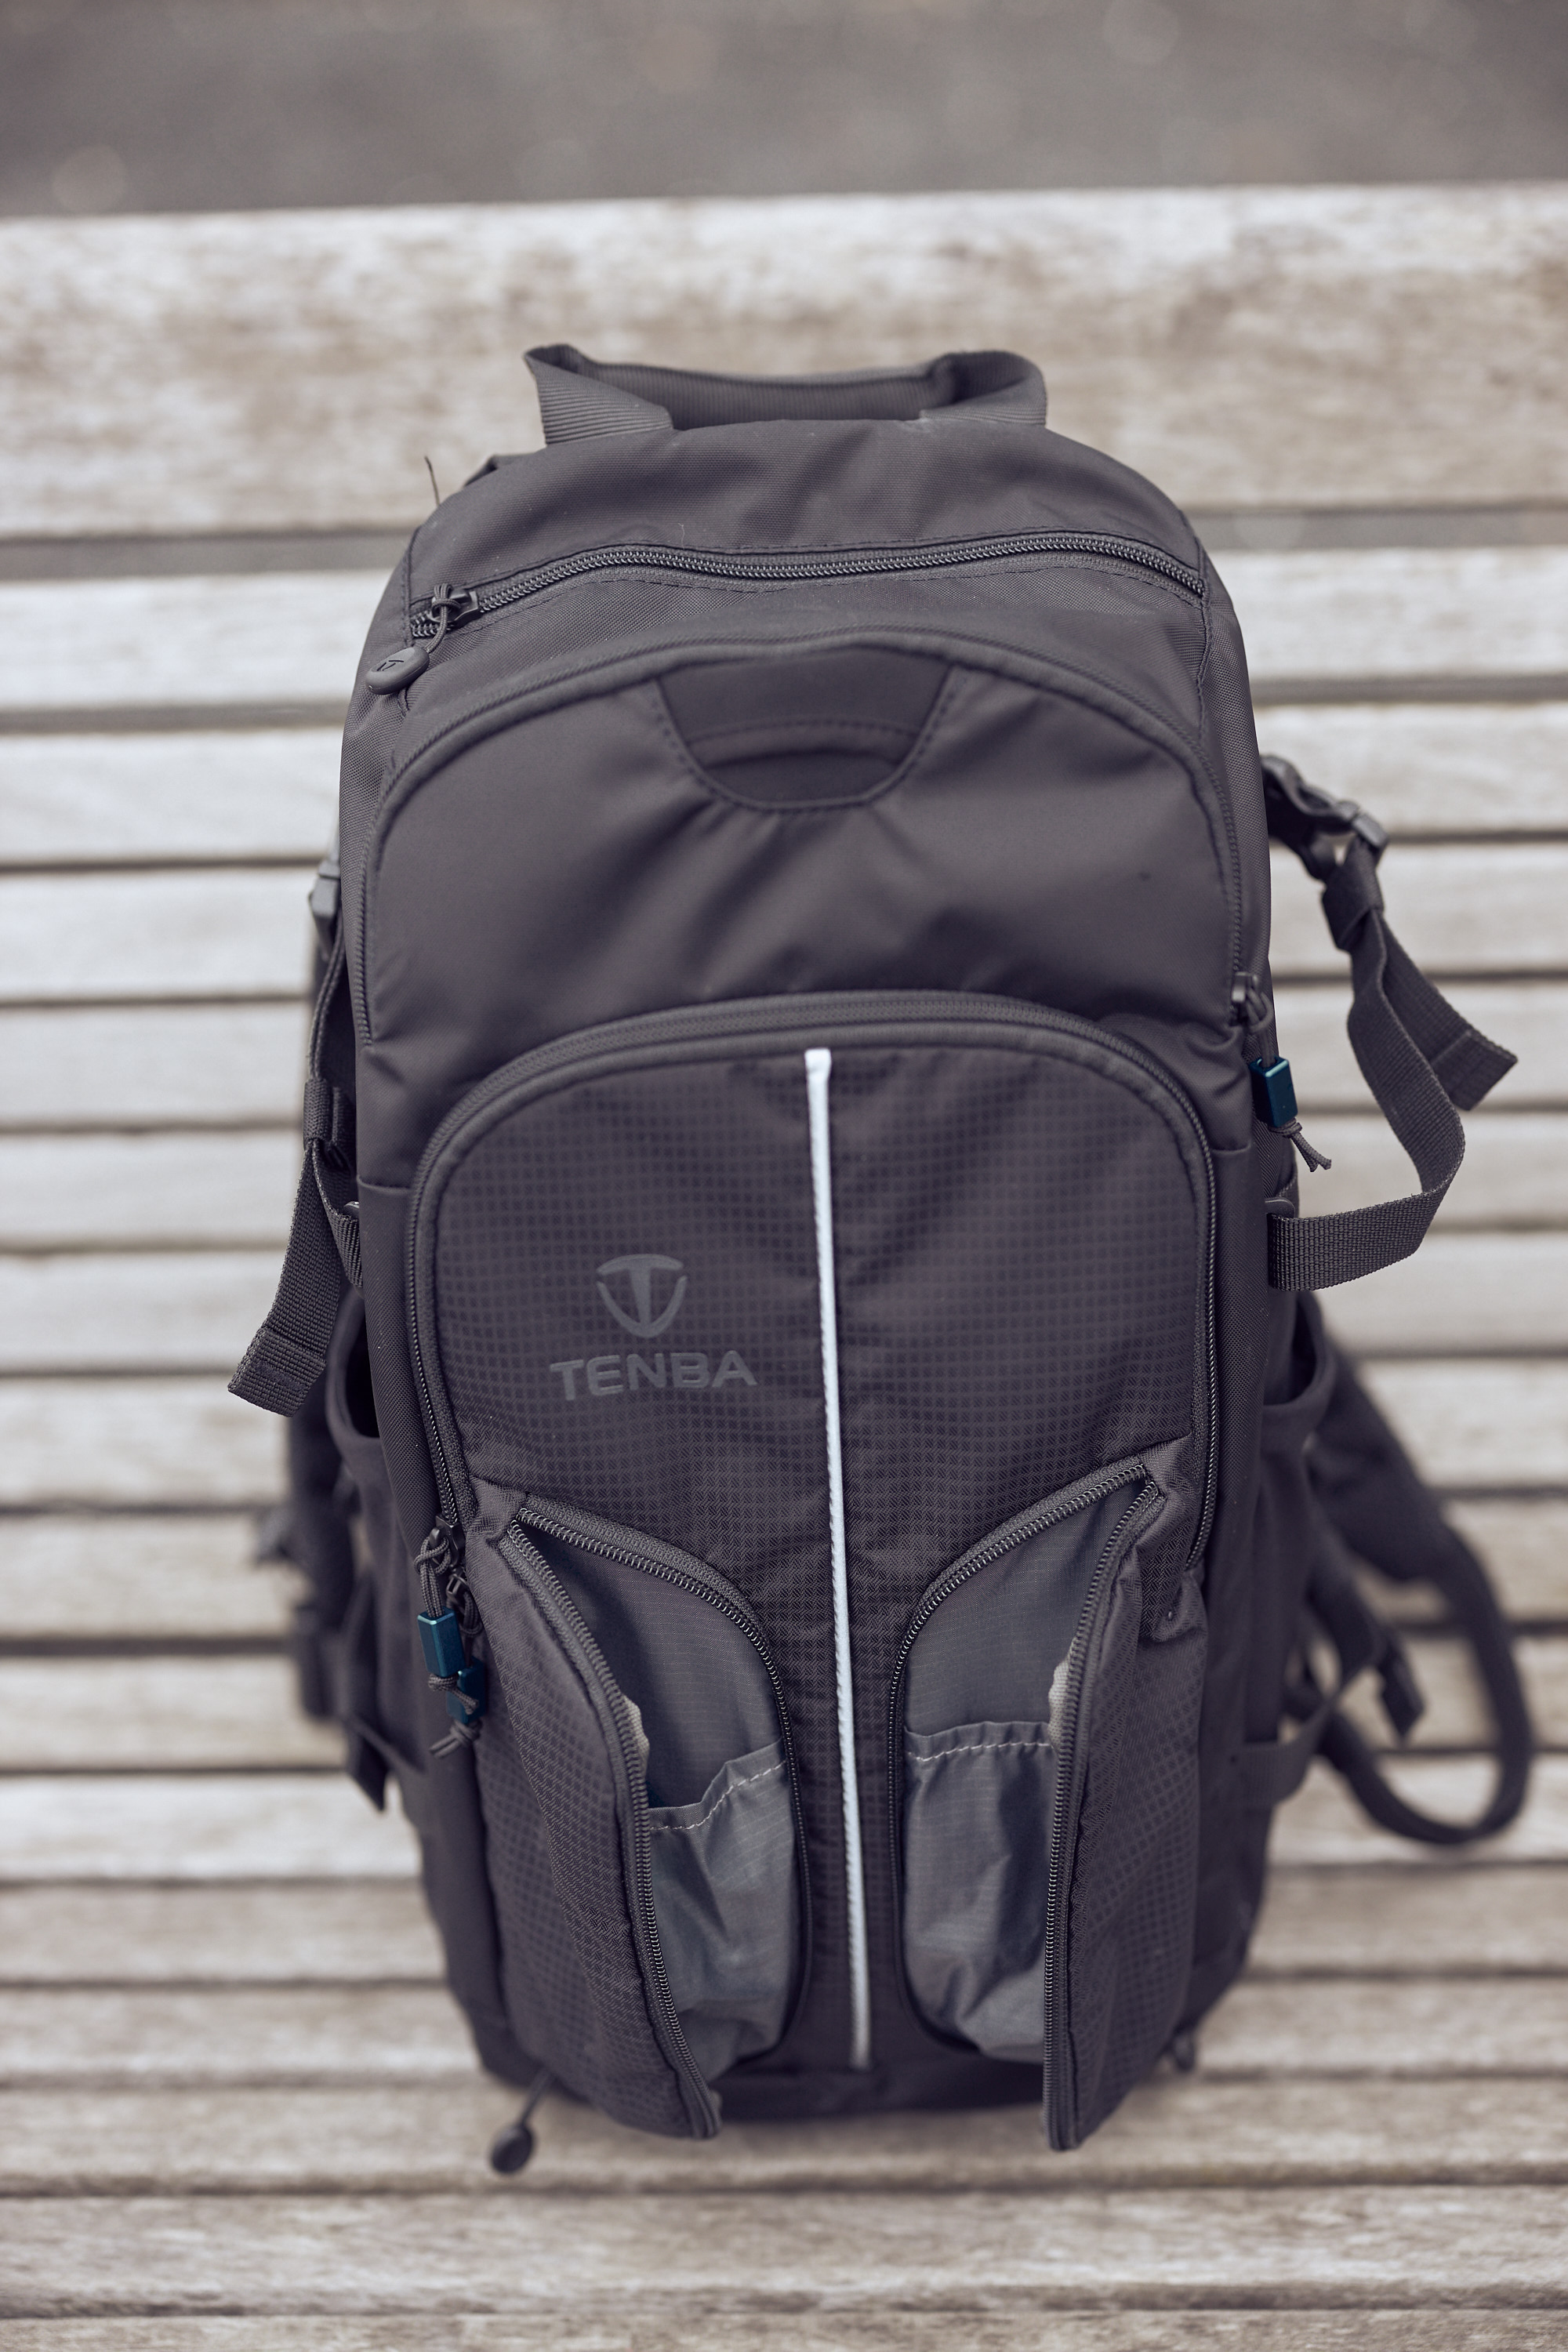 Review: Tenba Shootout 16L DSLR Backpack (The In-Between Bag)